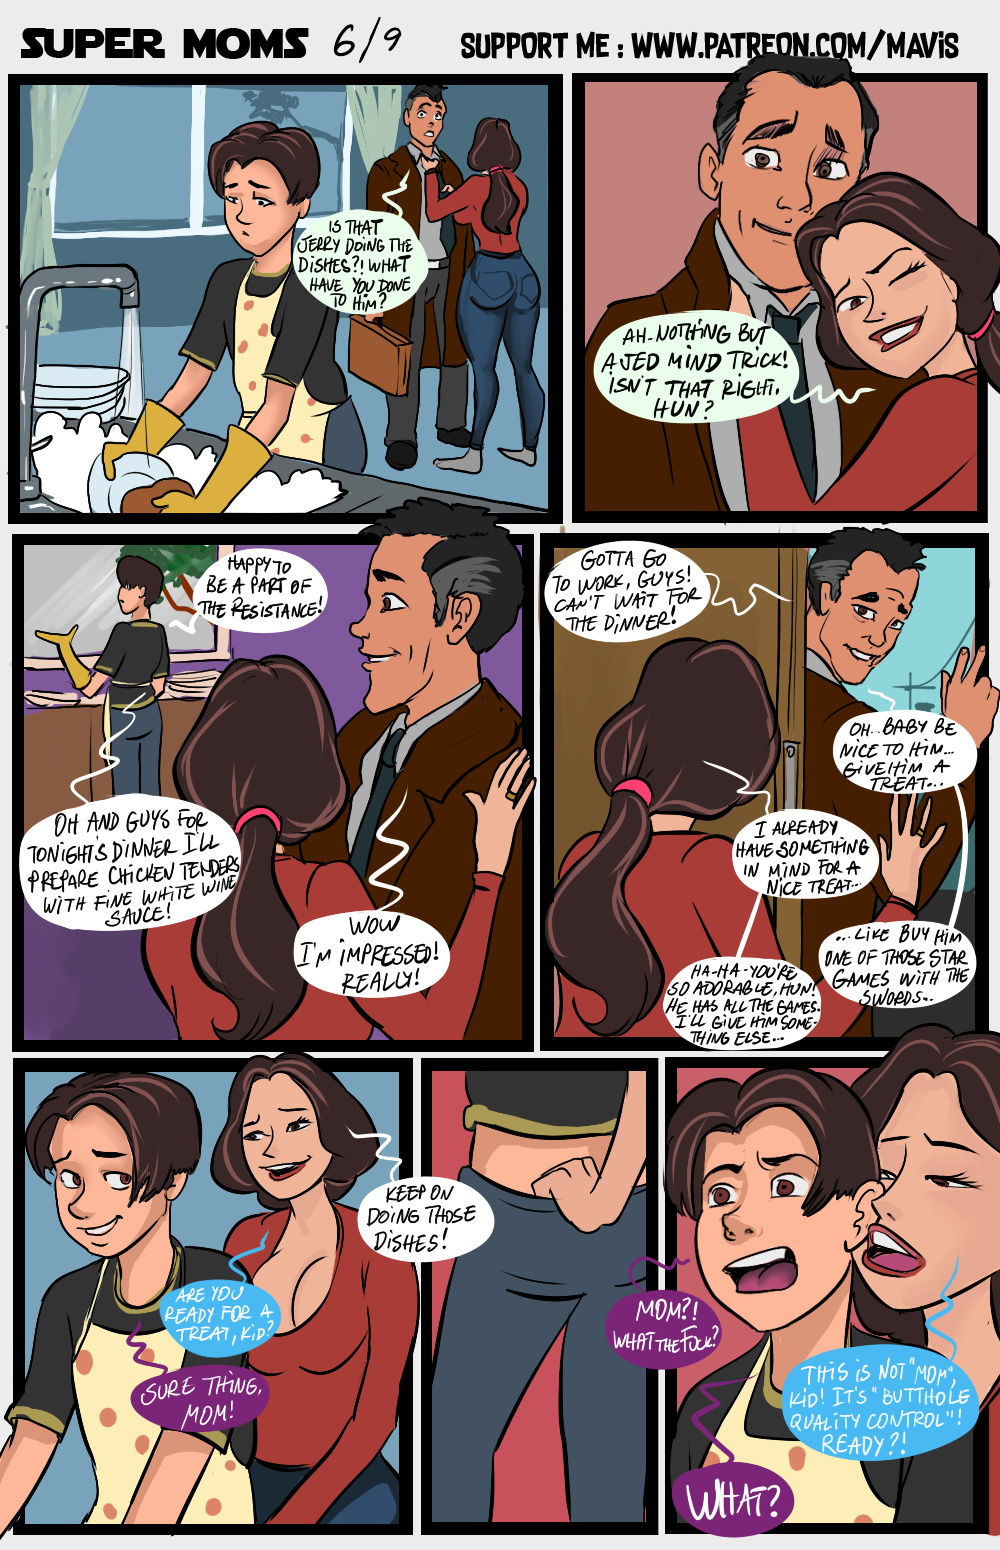 Tricky Mom S Com - Super Moms - Page 7 - Comic Porn XXX